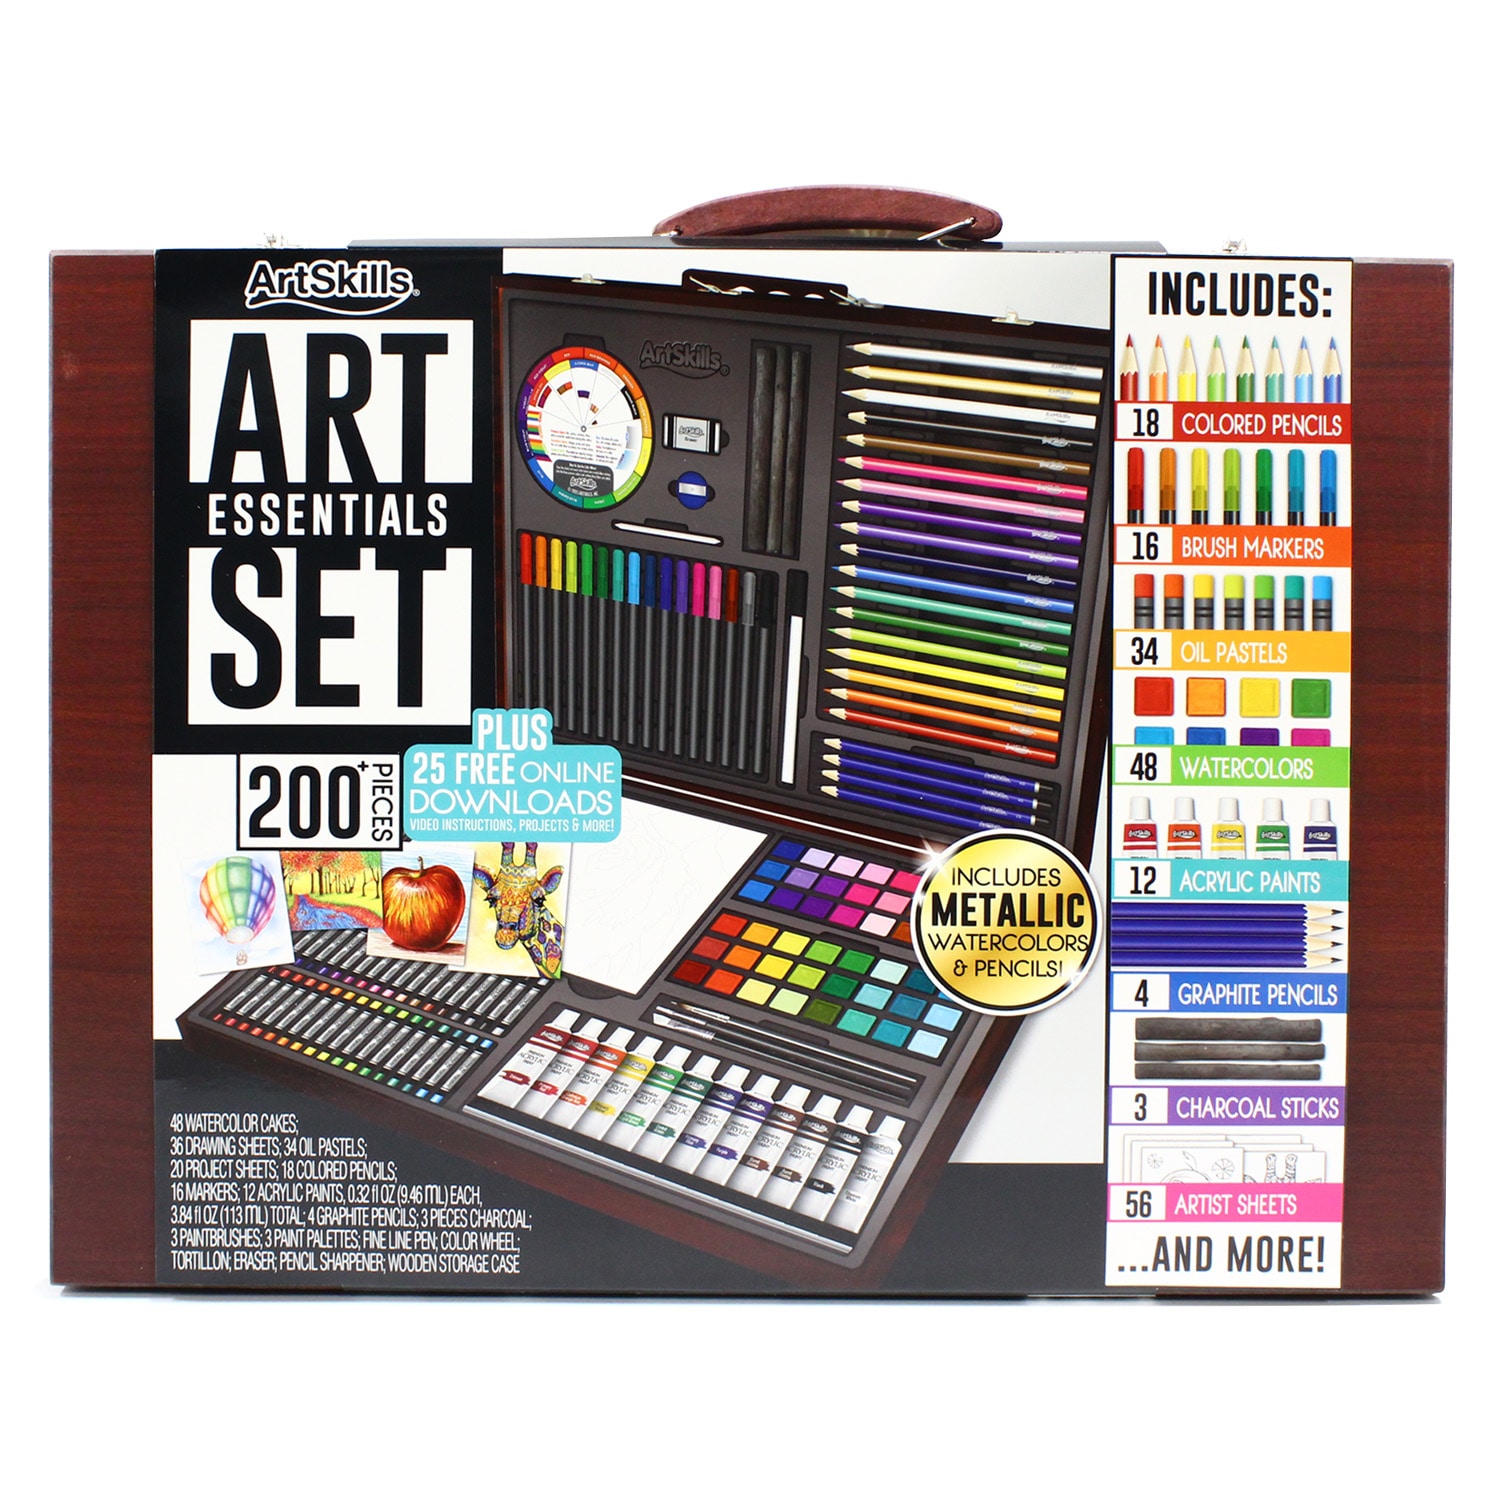 Acrylic Paint Set,56 PCS Professional Painting Supplies with Paint Brushes,  36 Colors Acrylic Paints, 1 Easel, 2 Painting Canvases, Palette, Paint